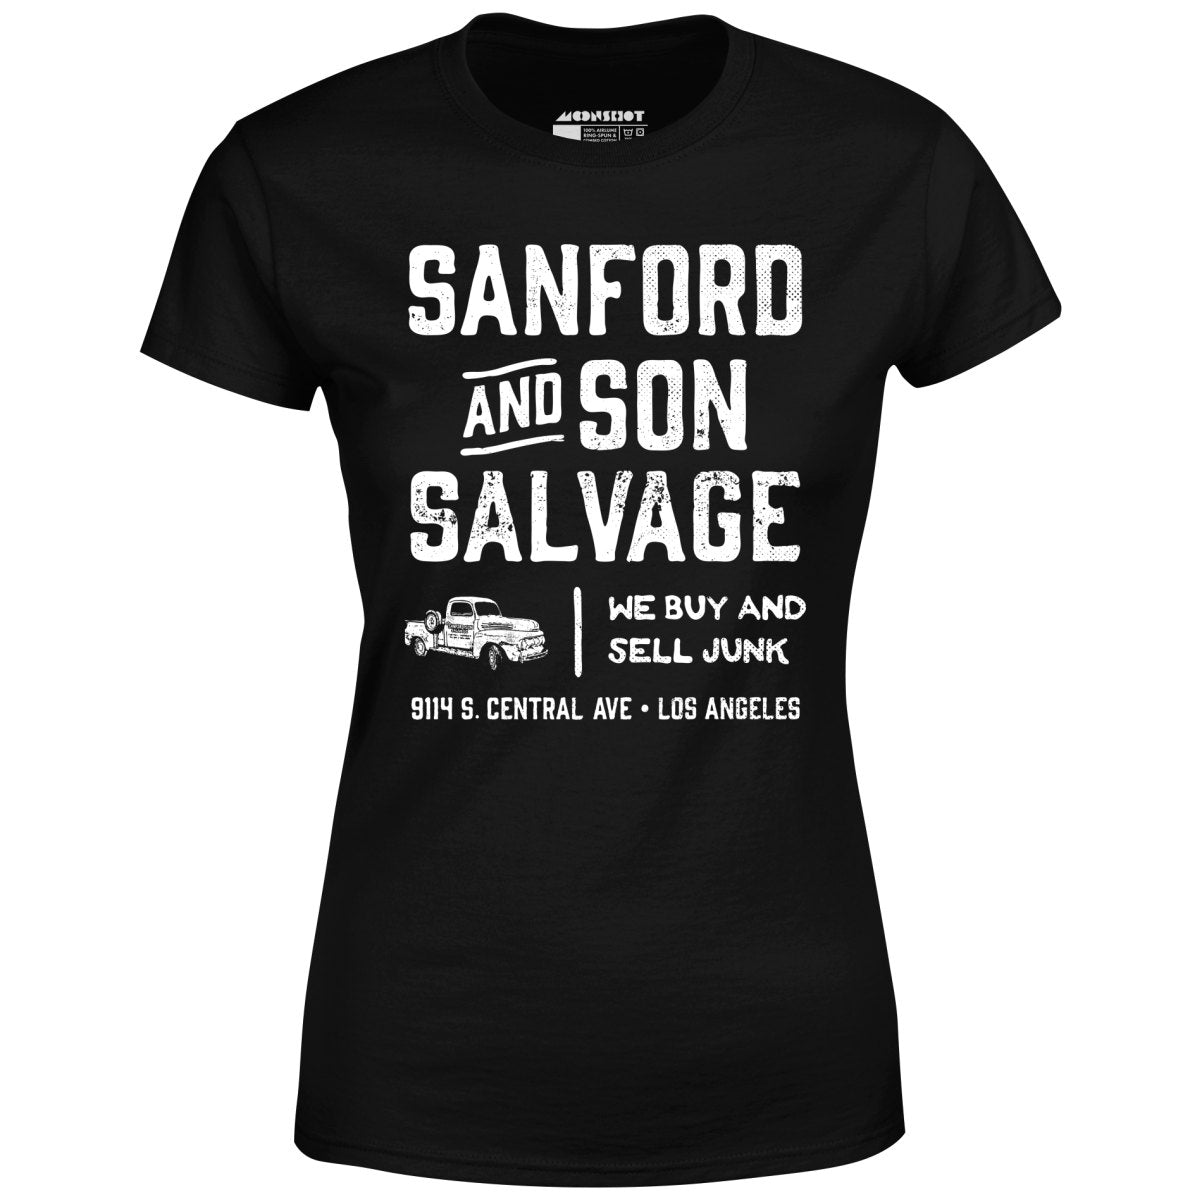 Sanford and Son Salvage - Women's T-Shirt